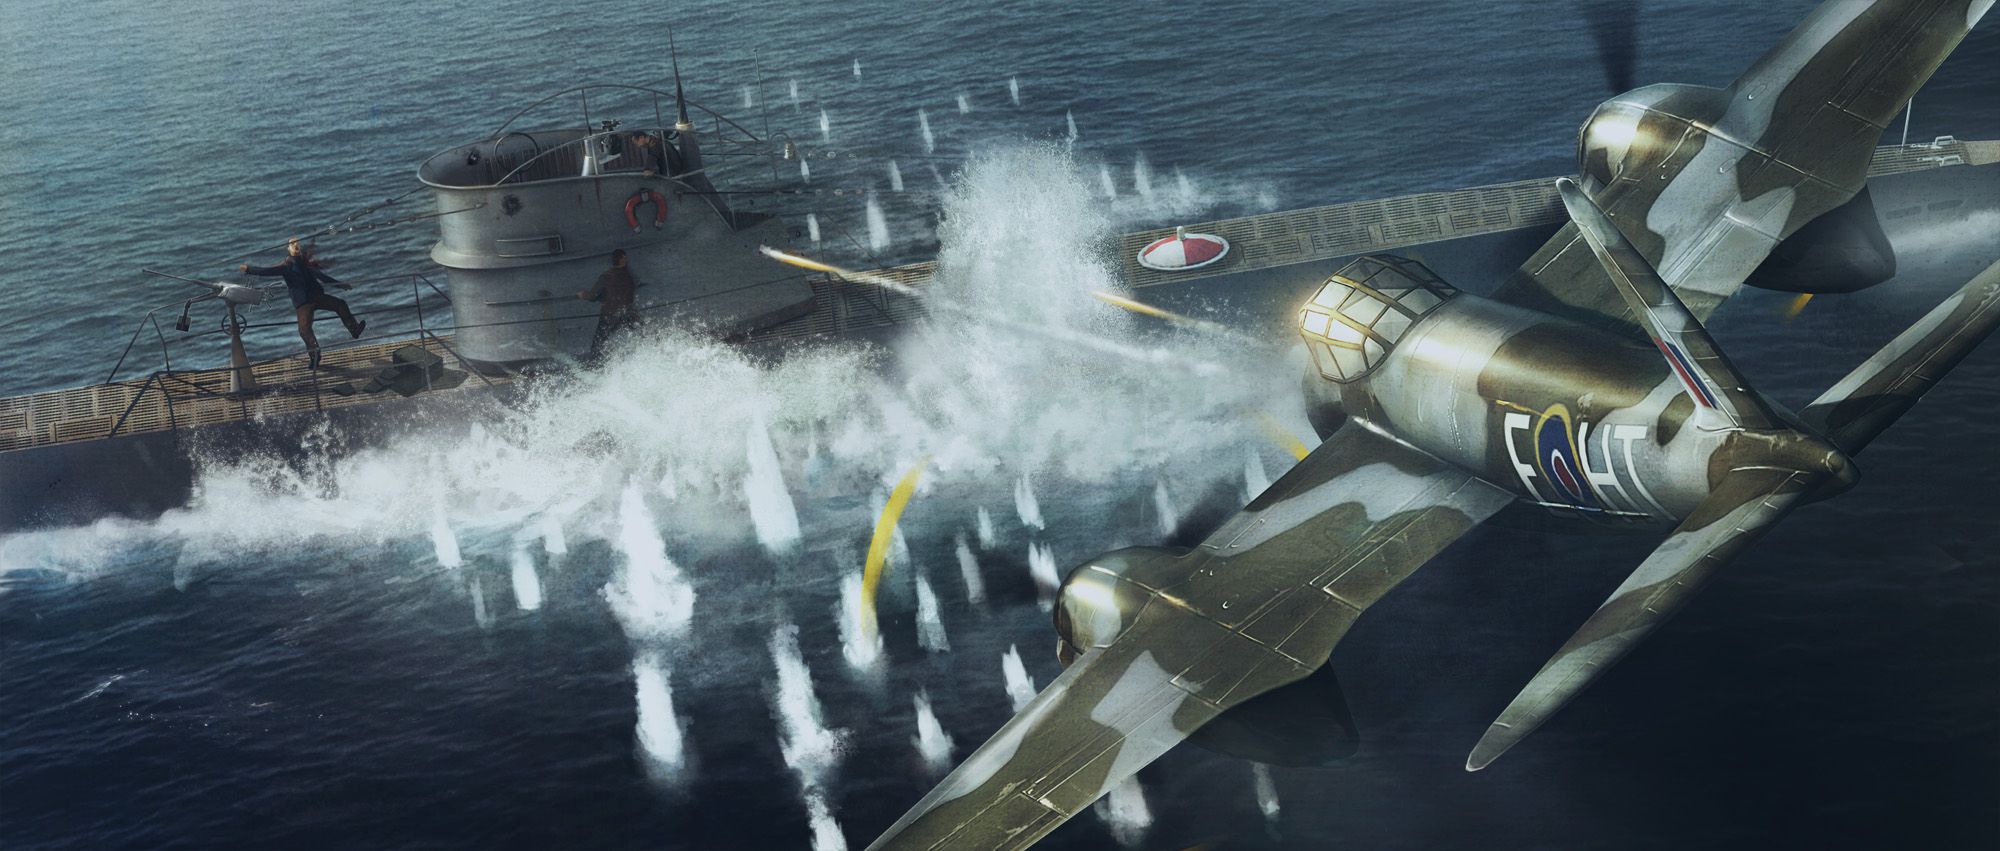 Mosquito_Attack_2d_illustration_submarine_attack_battle_aircraft